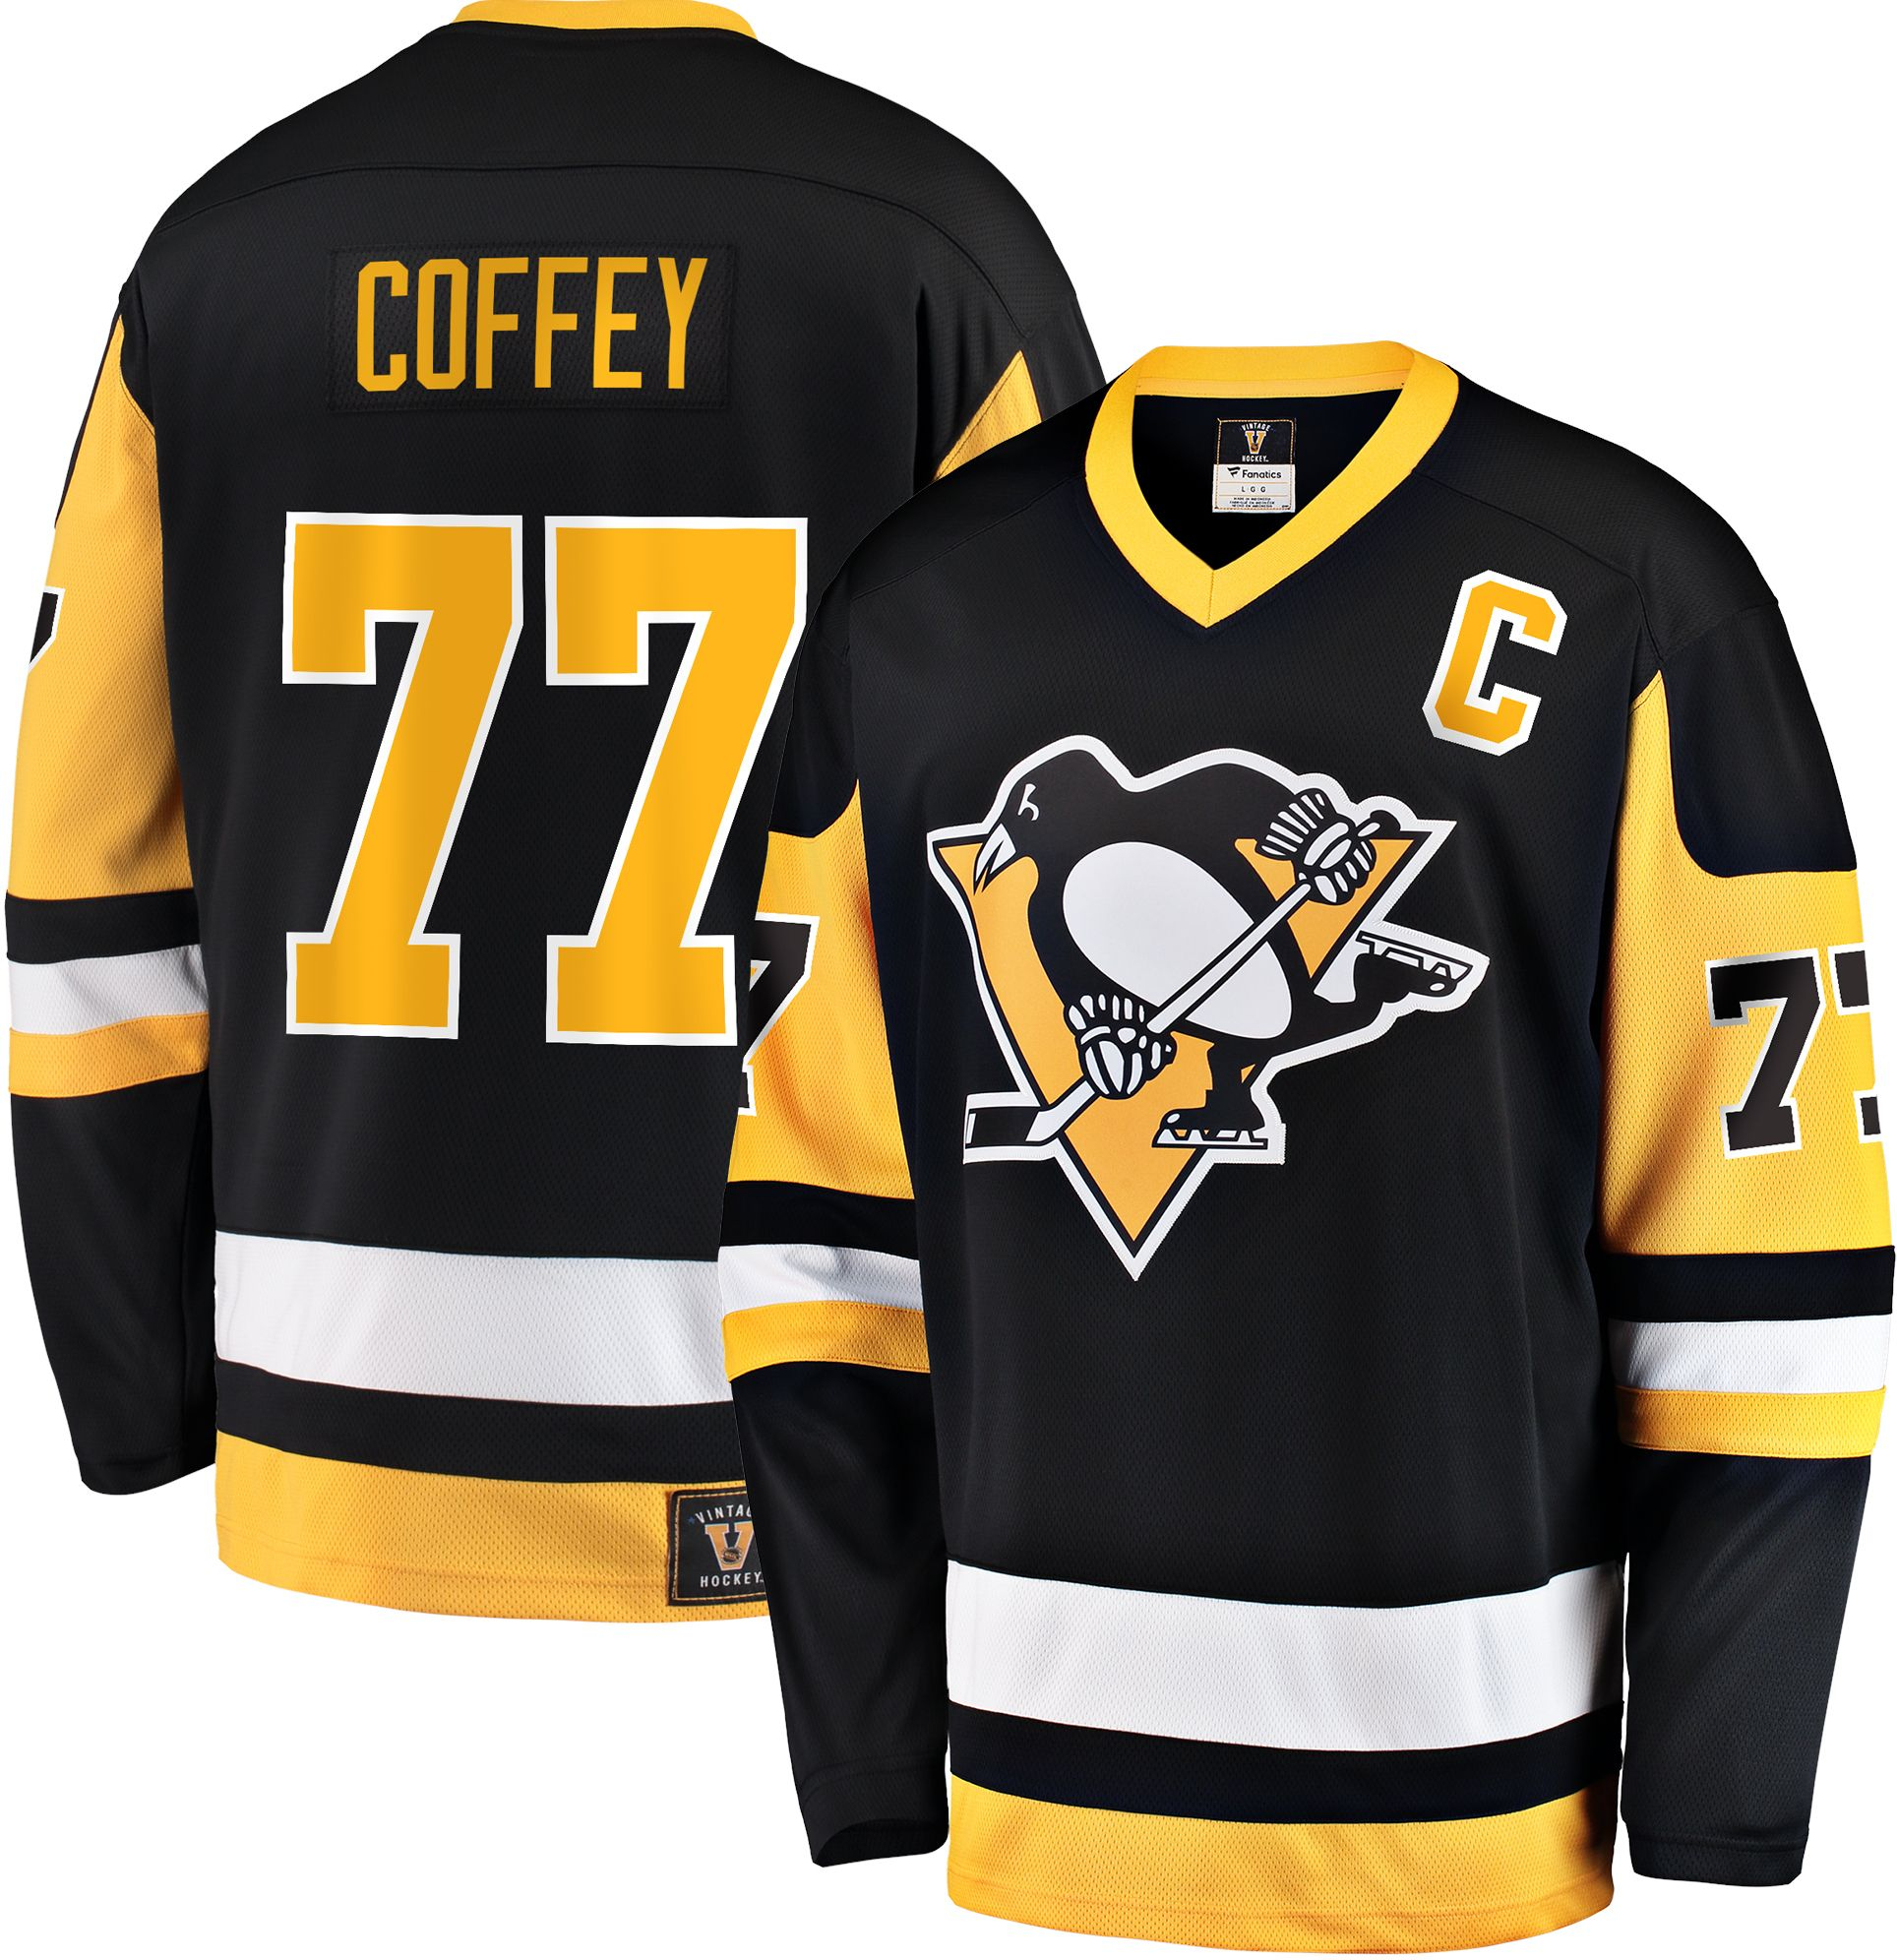 NHL Pittsburgh Penguins Paul Coffey #77 Breakaway Vintage Replica Jersey, Men's, XL, Black